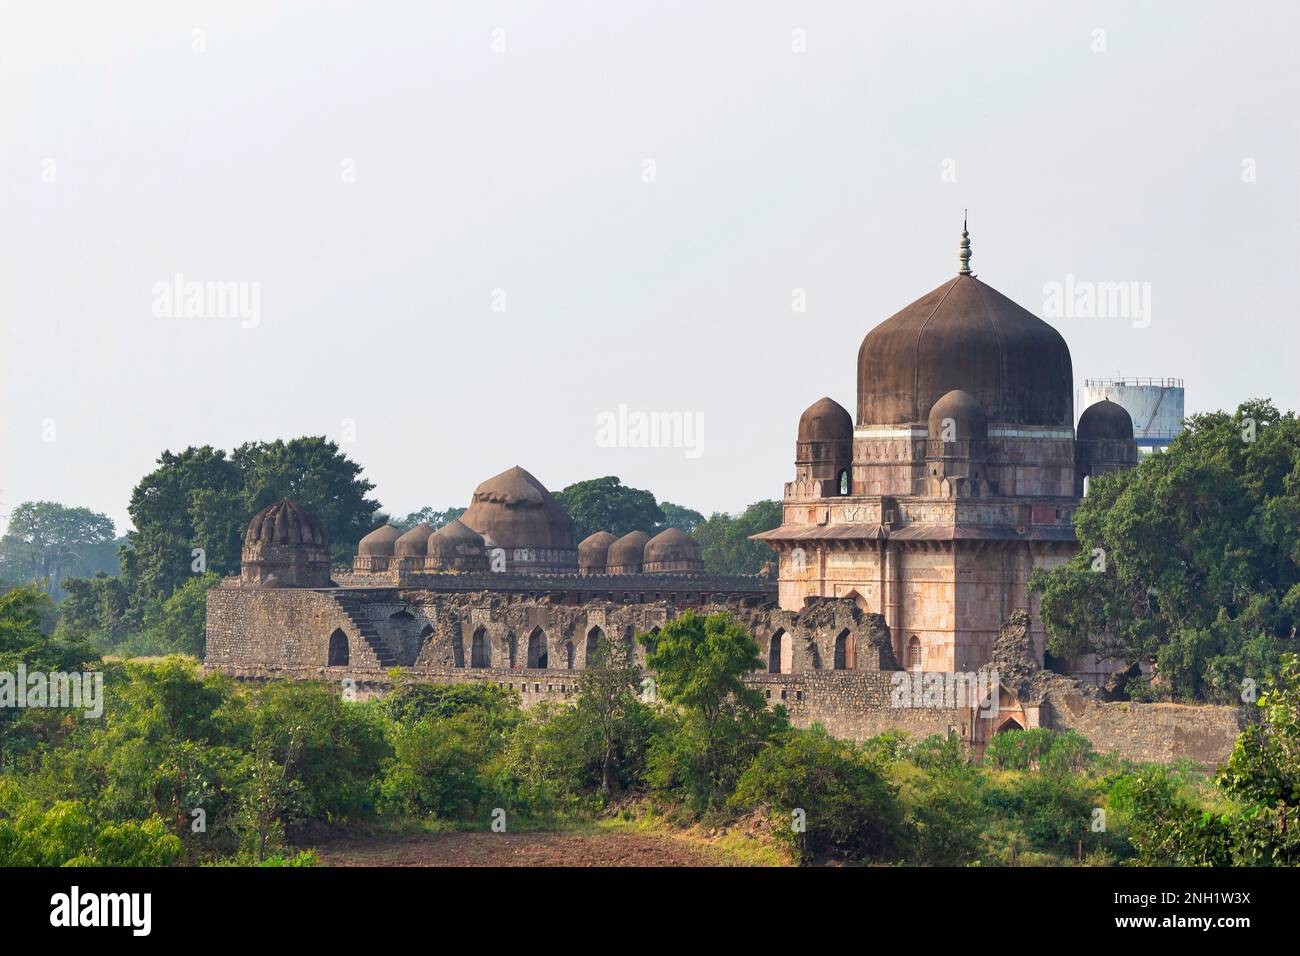 View of Darya Khan Tombs and Ruined Walls of Campus, Mandu, Madhya Pradesh, India. Stock Photo